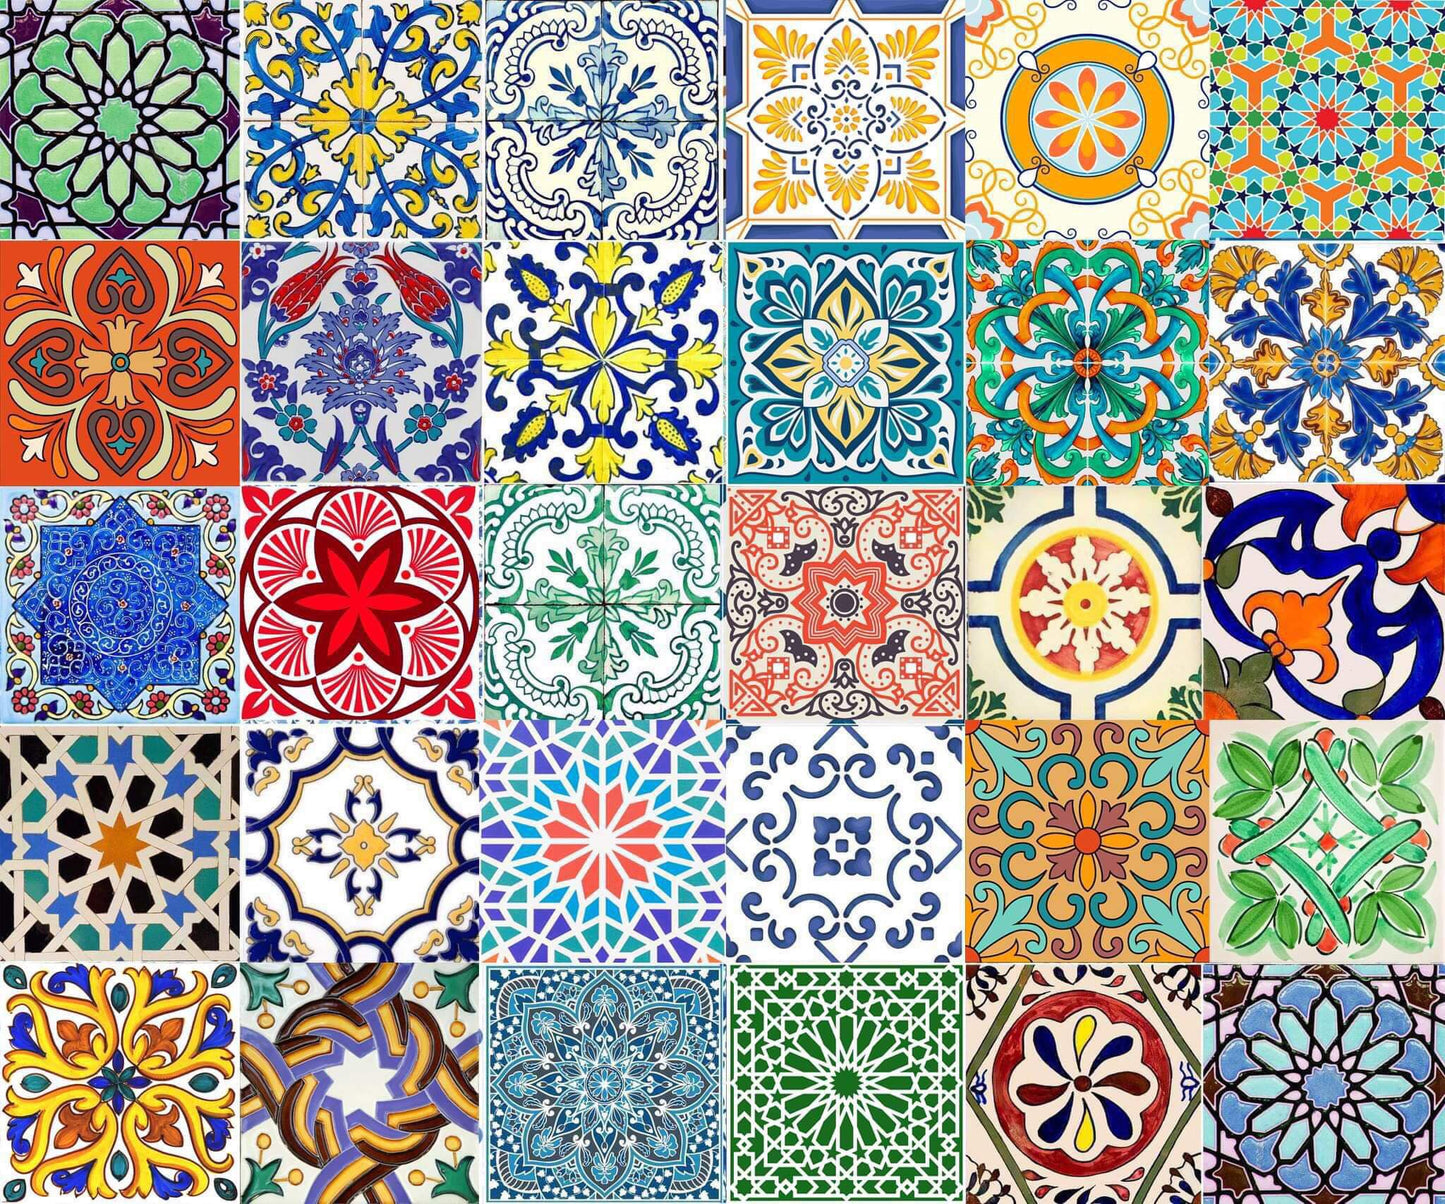 Mediterranean ceramic tiles -  set of 34 wall decor tiles - Kitchen Backsplash Tiles, Table Decorative Tiles, Bathroom Tiles, Coaster